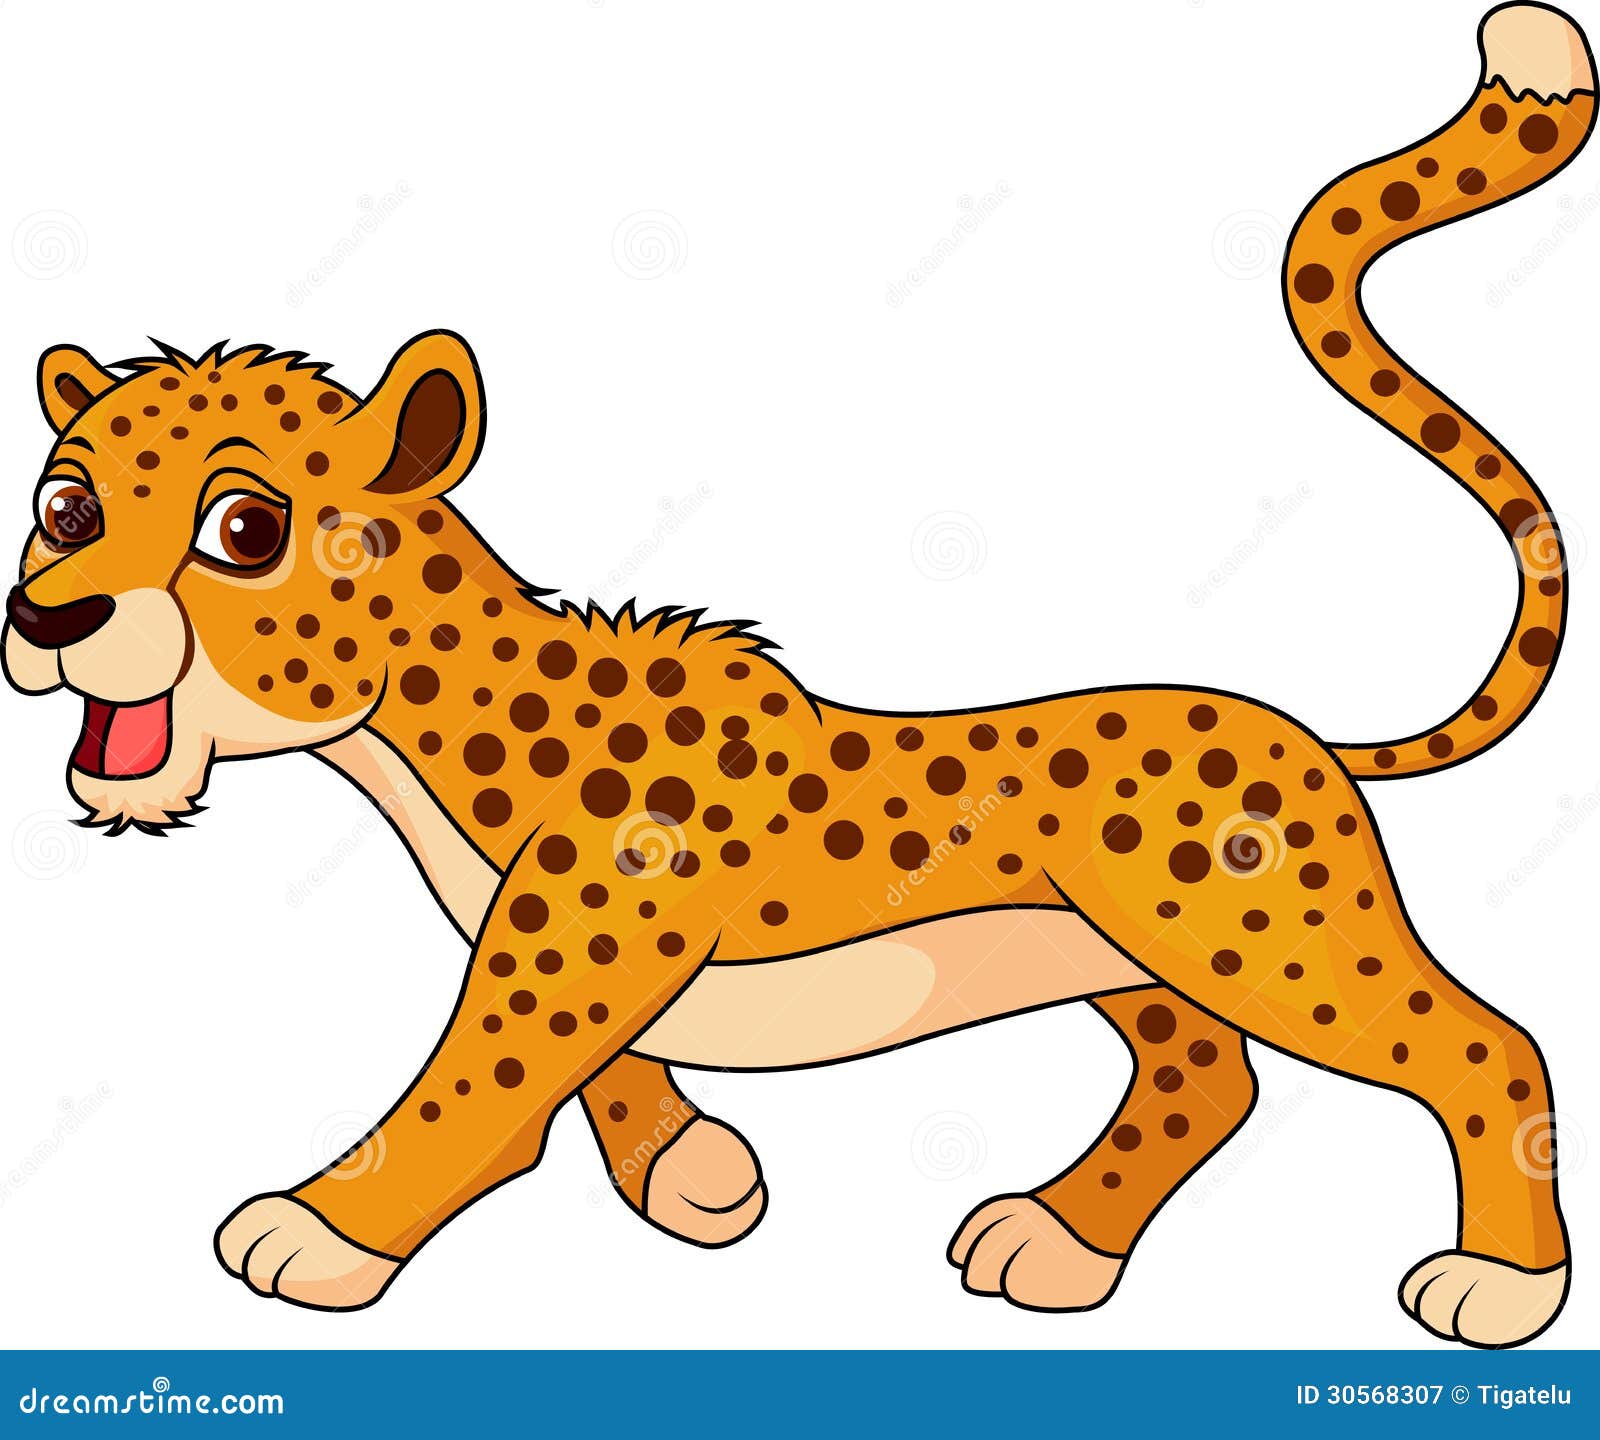 cute cheetah cartoon